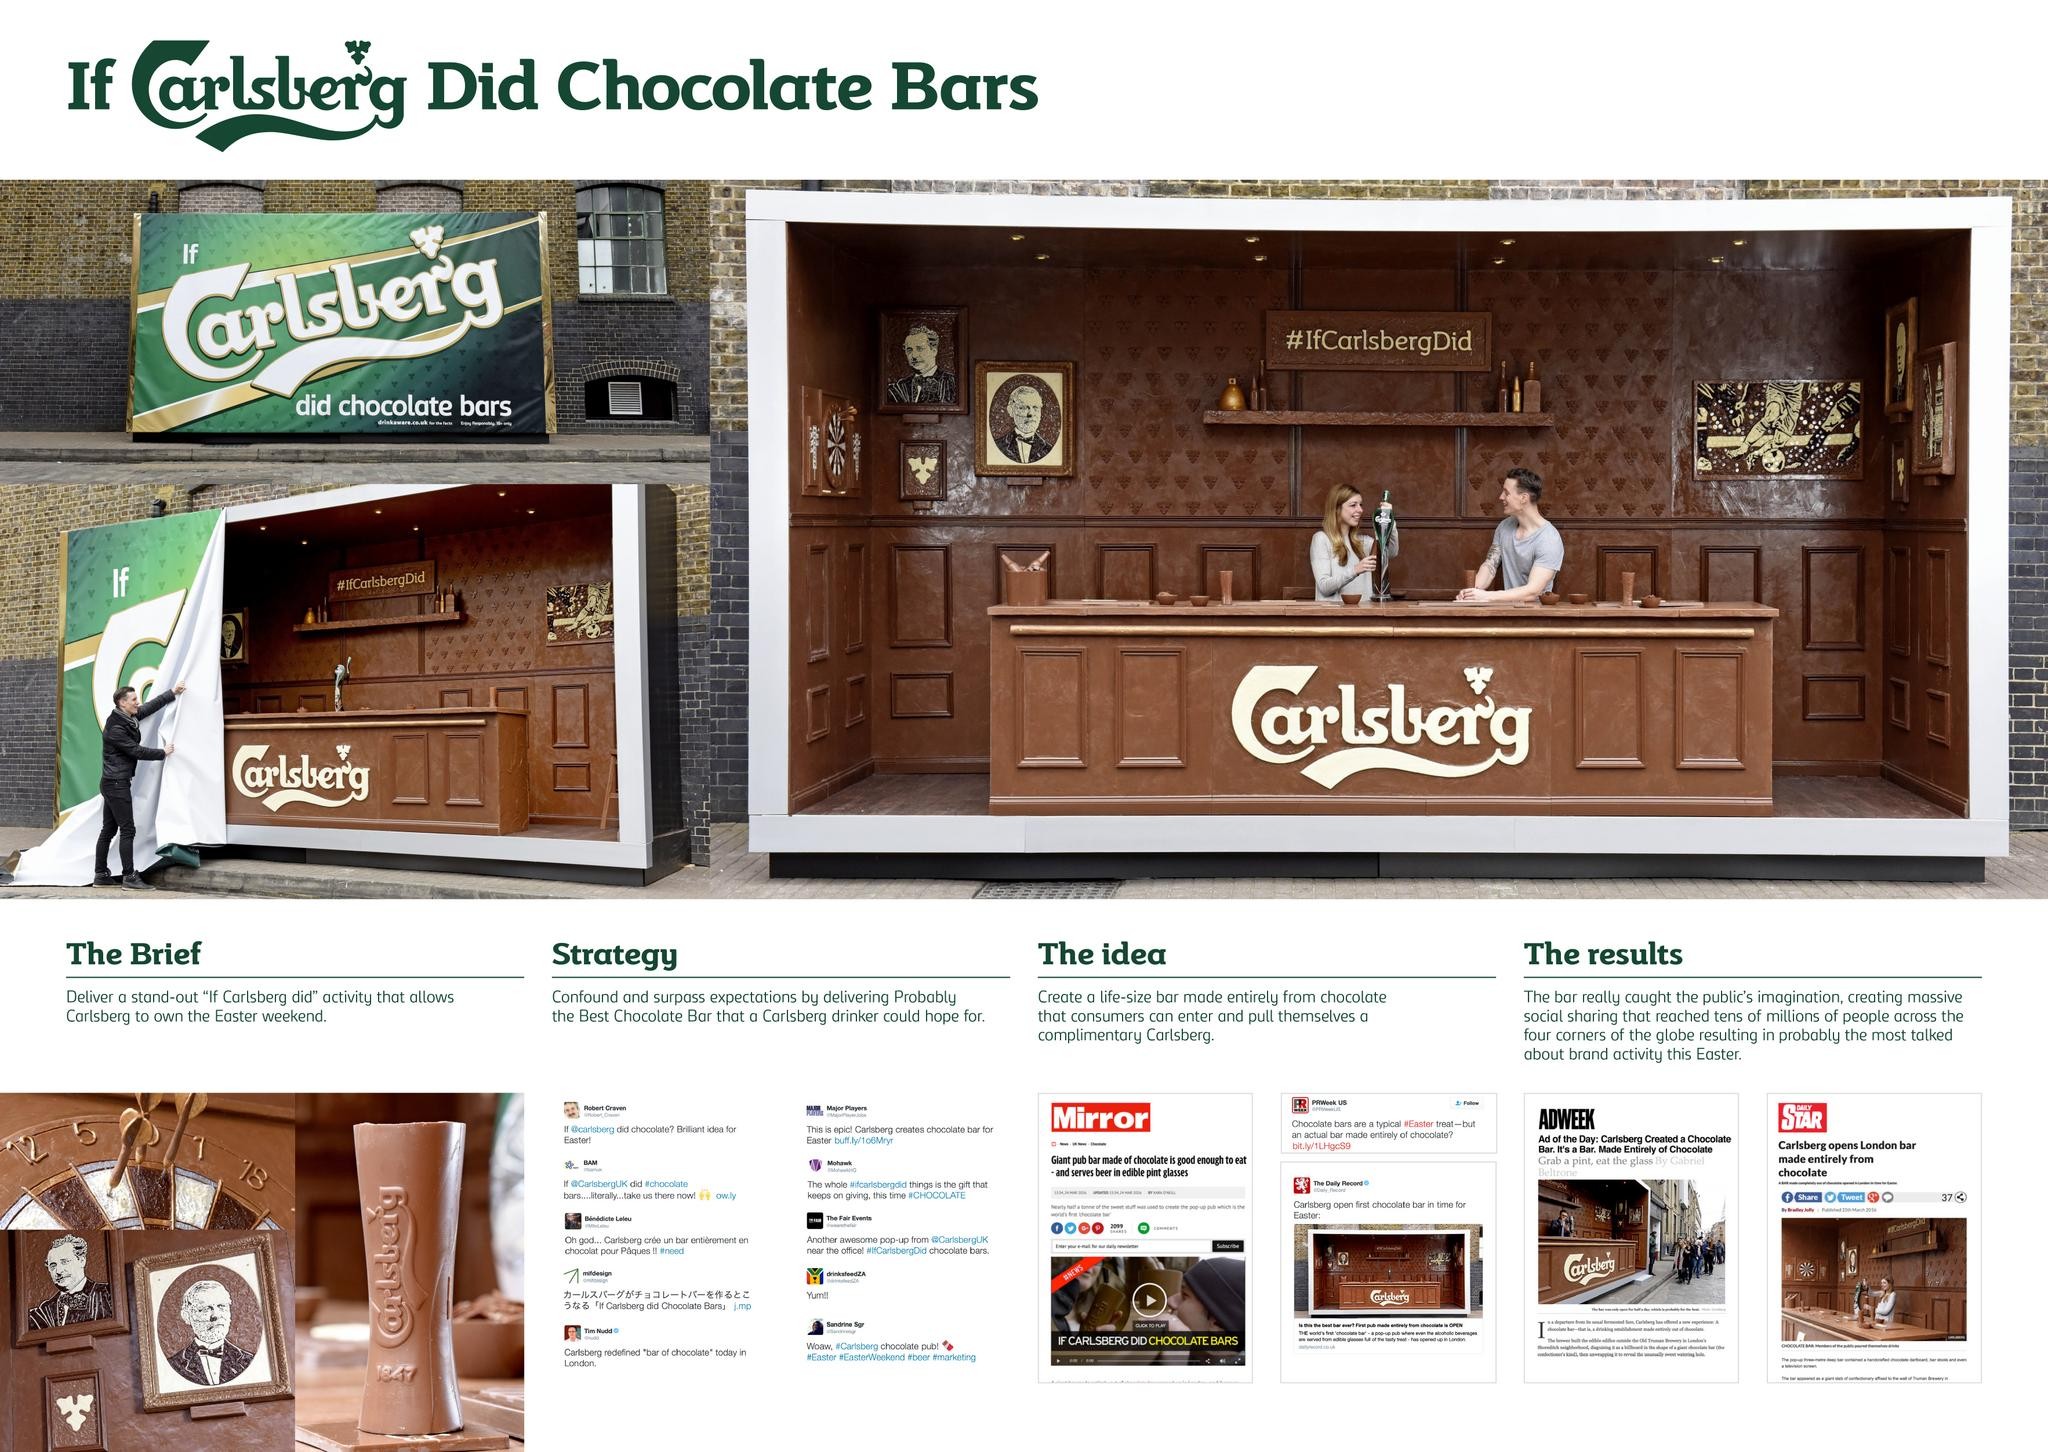 If Carlsberg did chocolate bars